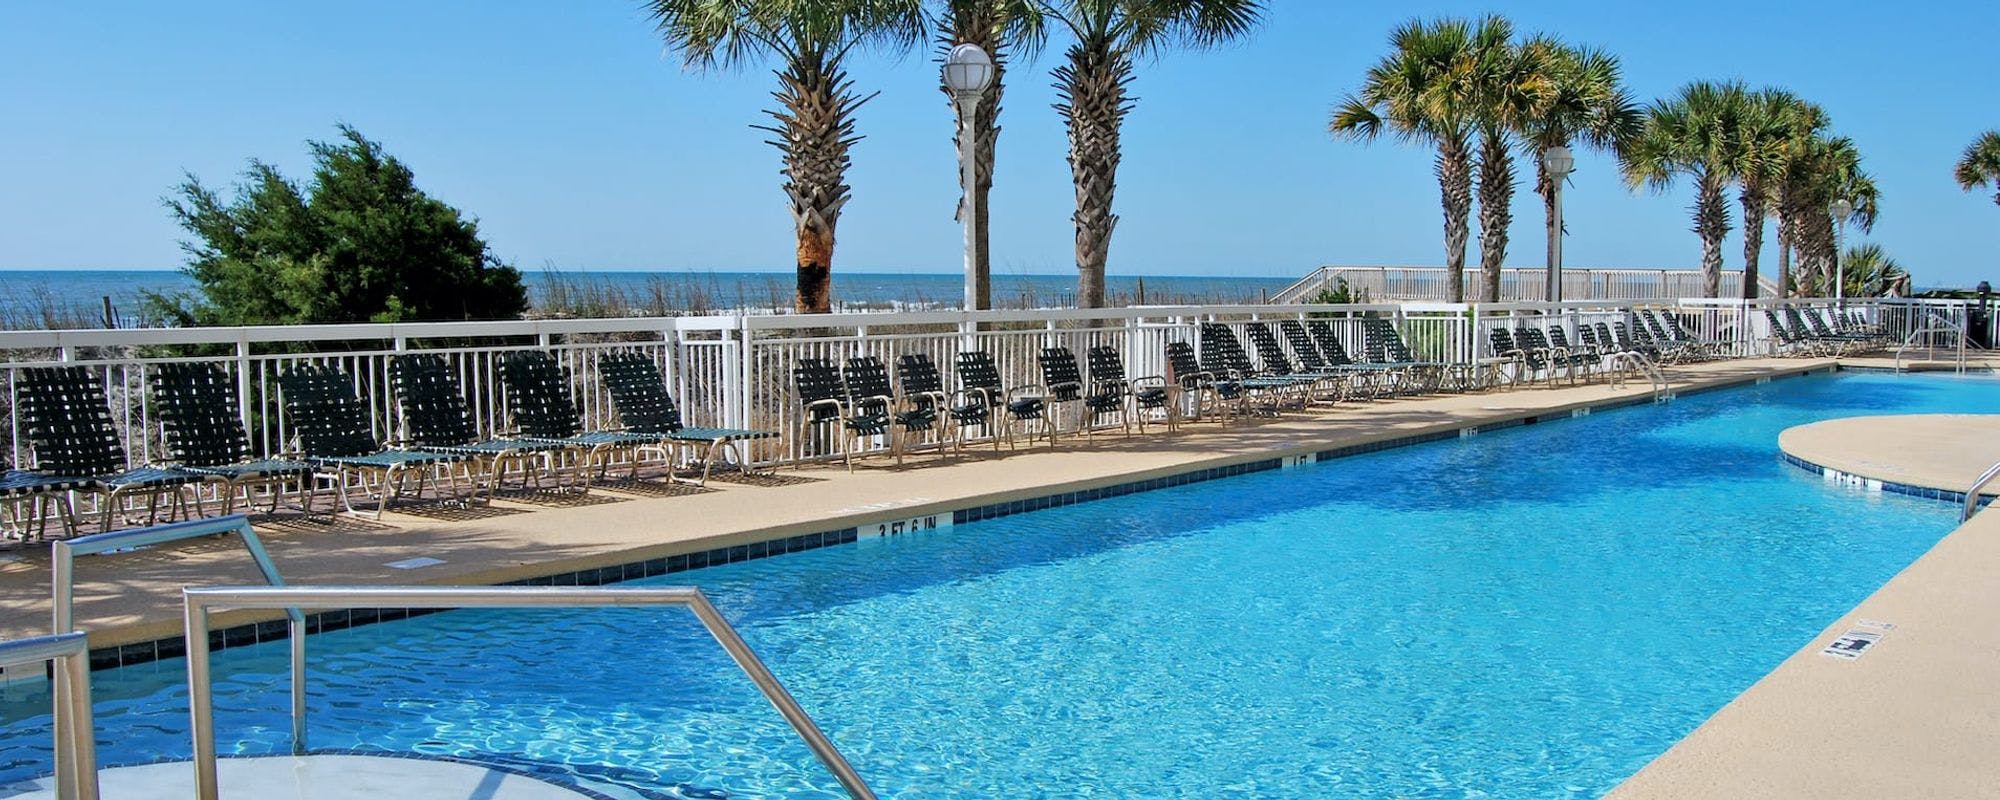 Oceanfront pool at Myrtle Beach condo rental